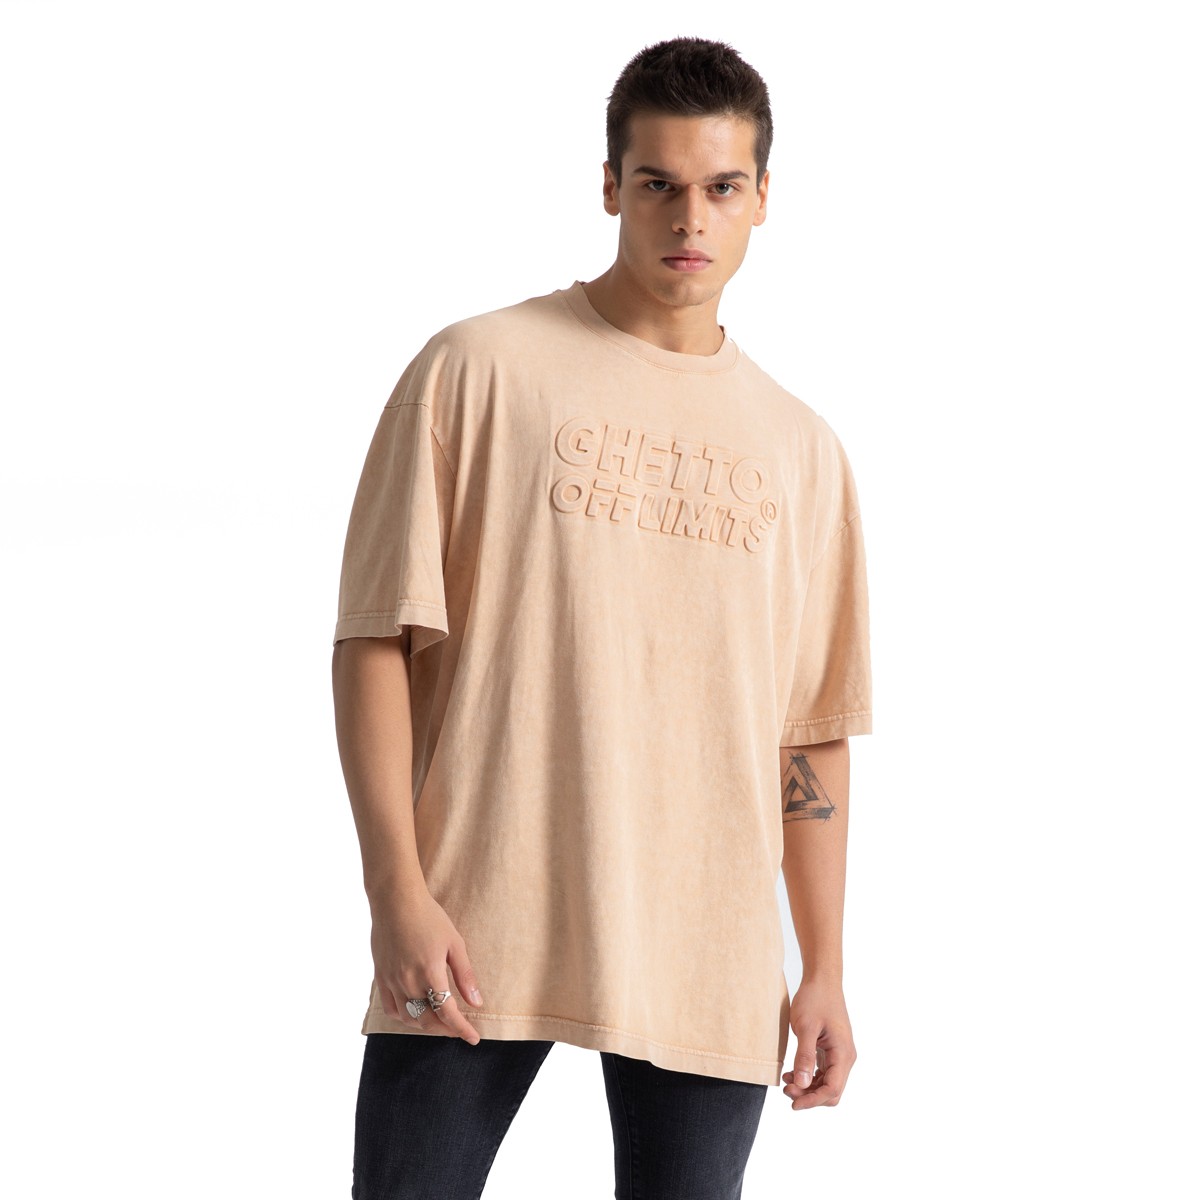 Ghetto Off Limits Acid Wash Latte Oversize T-Shirt TS-10008